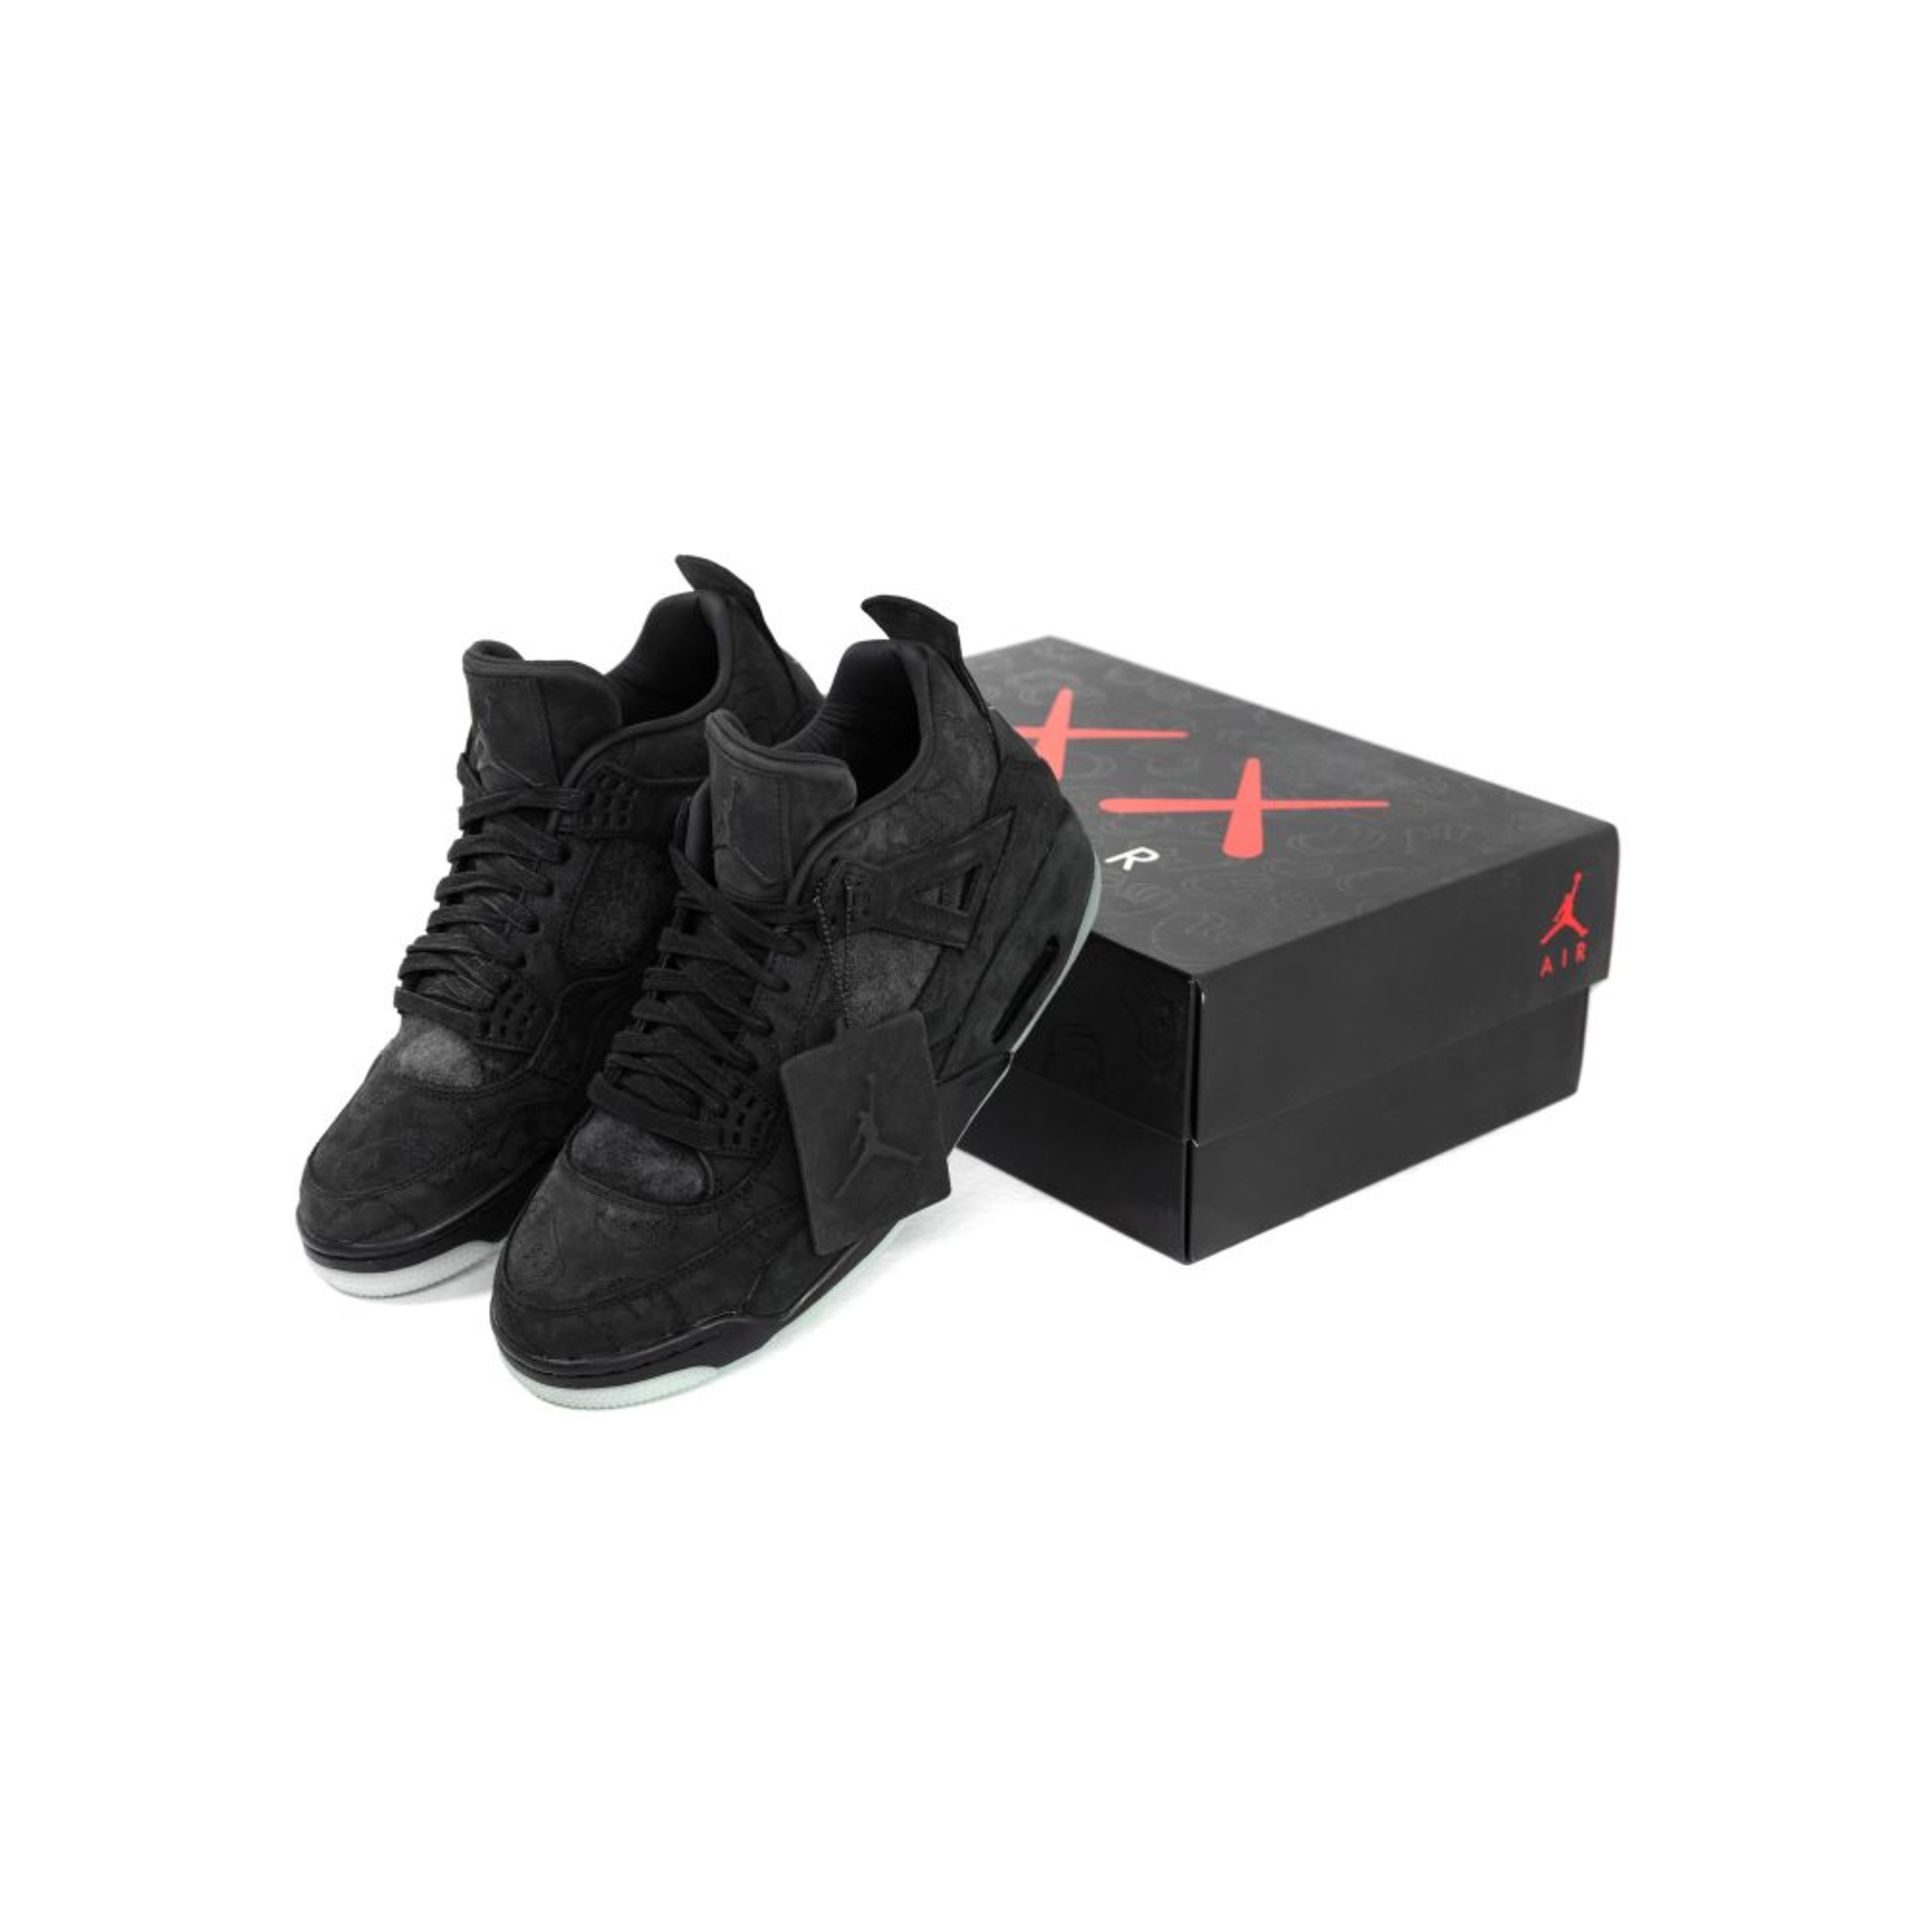 Nike X Kaws : Air Jordan 4 Retro Black, 10 US